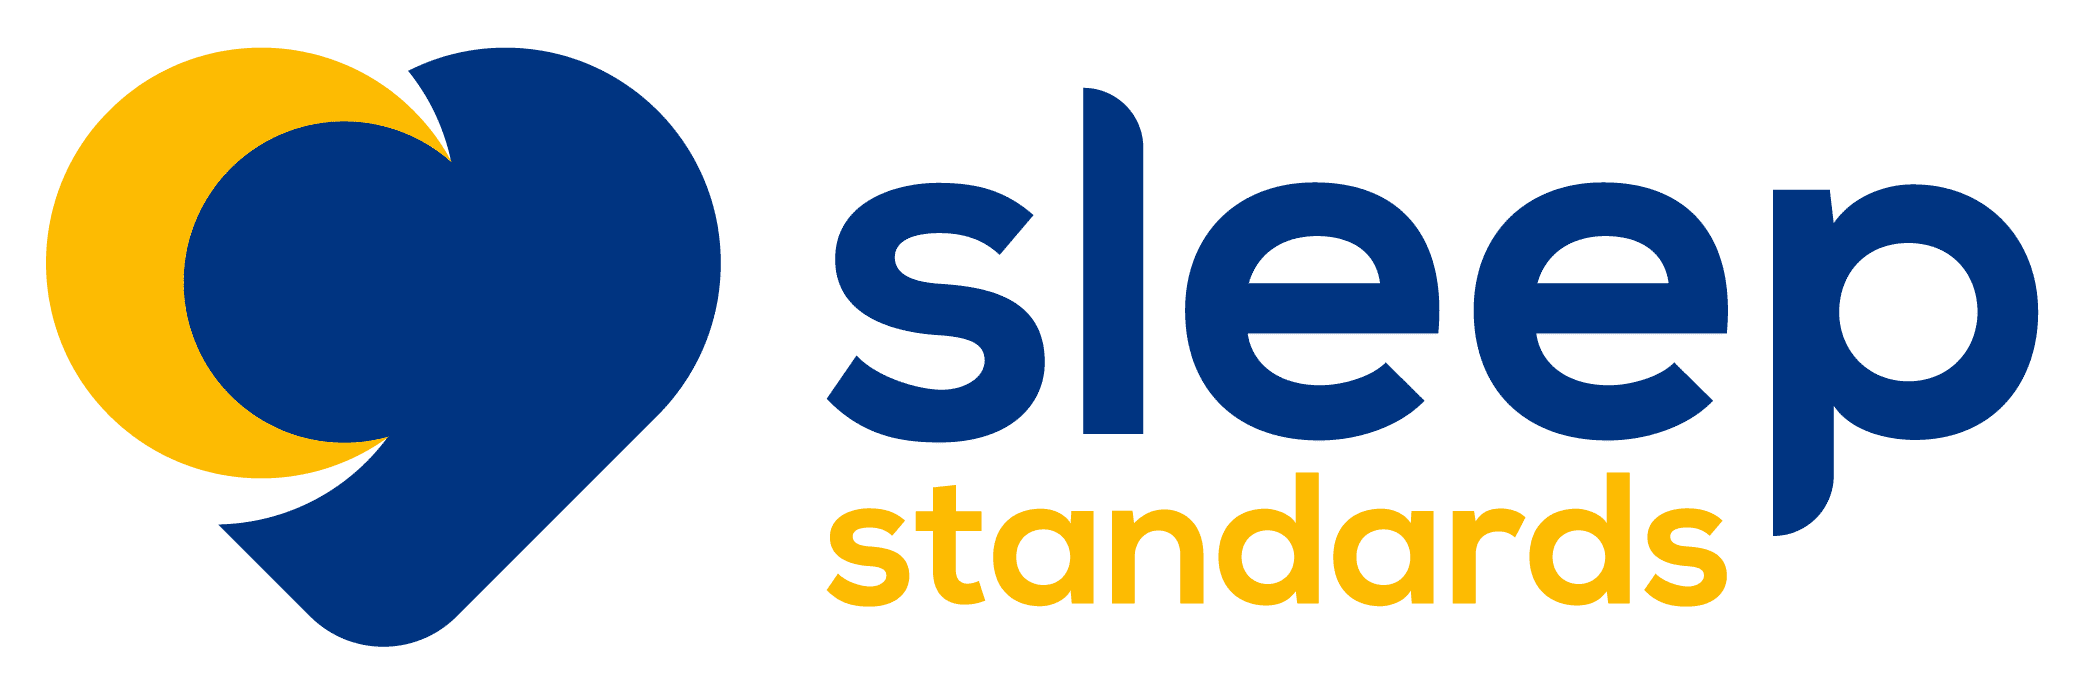 Sleep Standards Logo